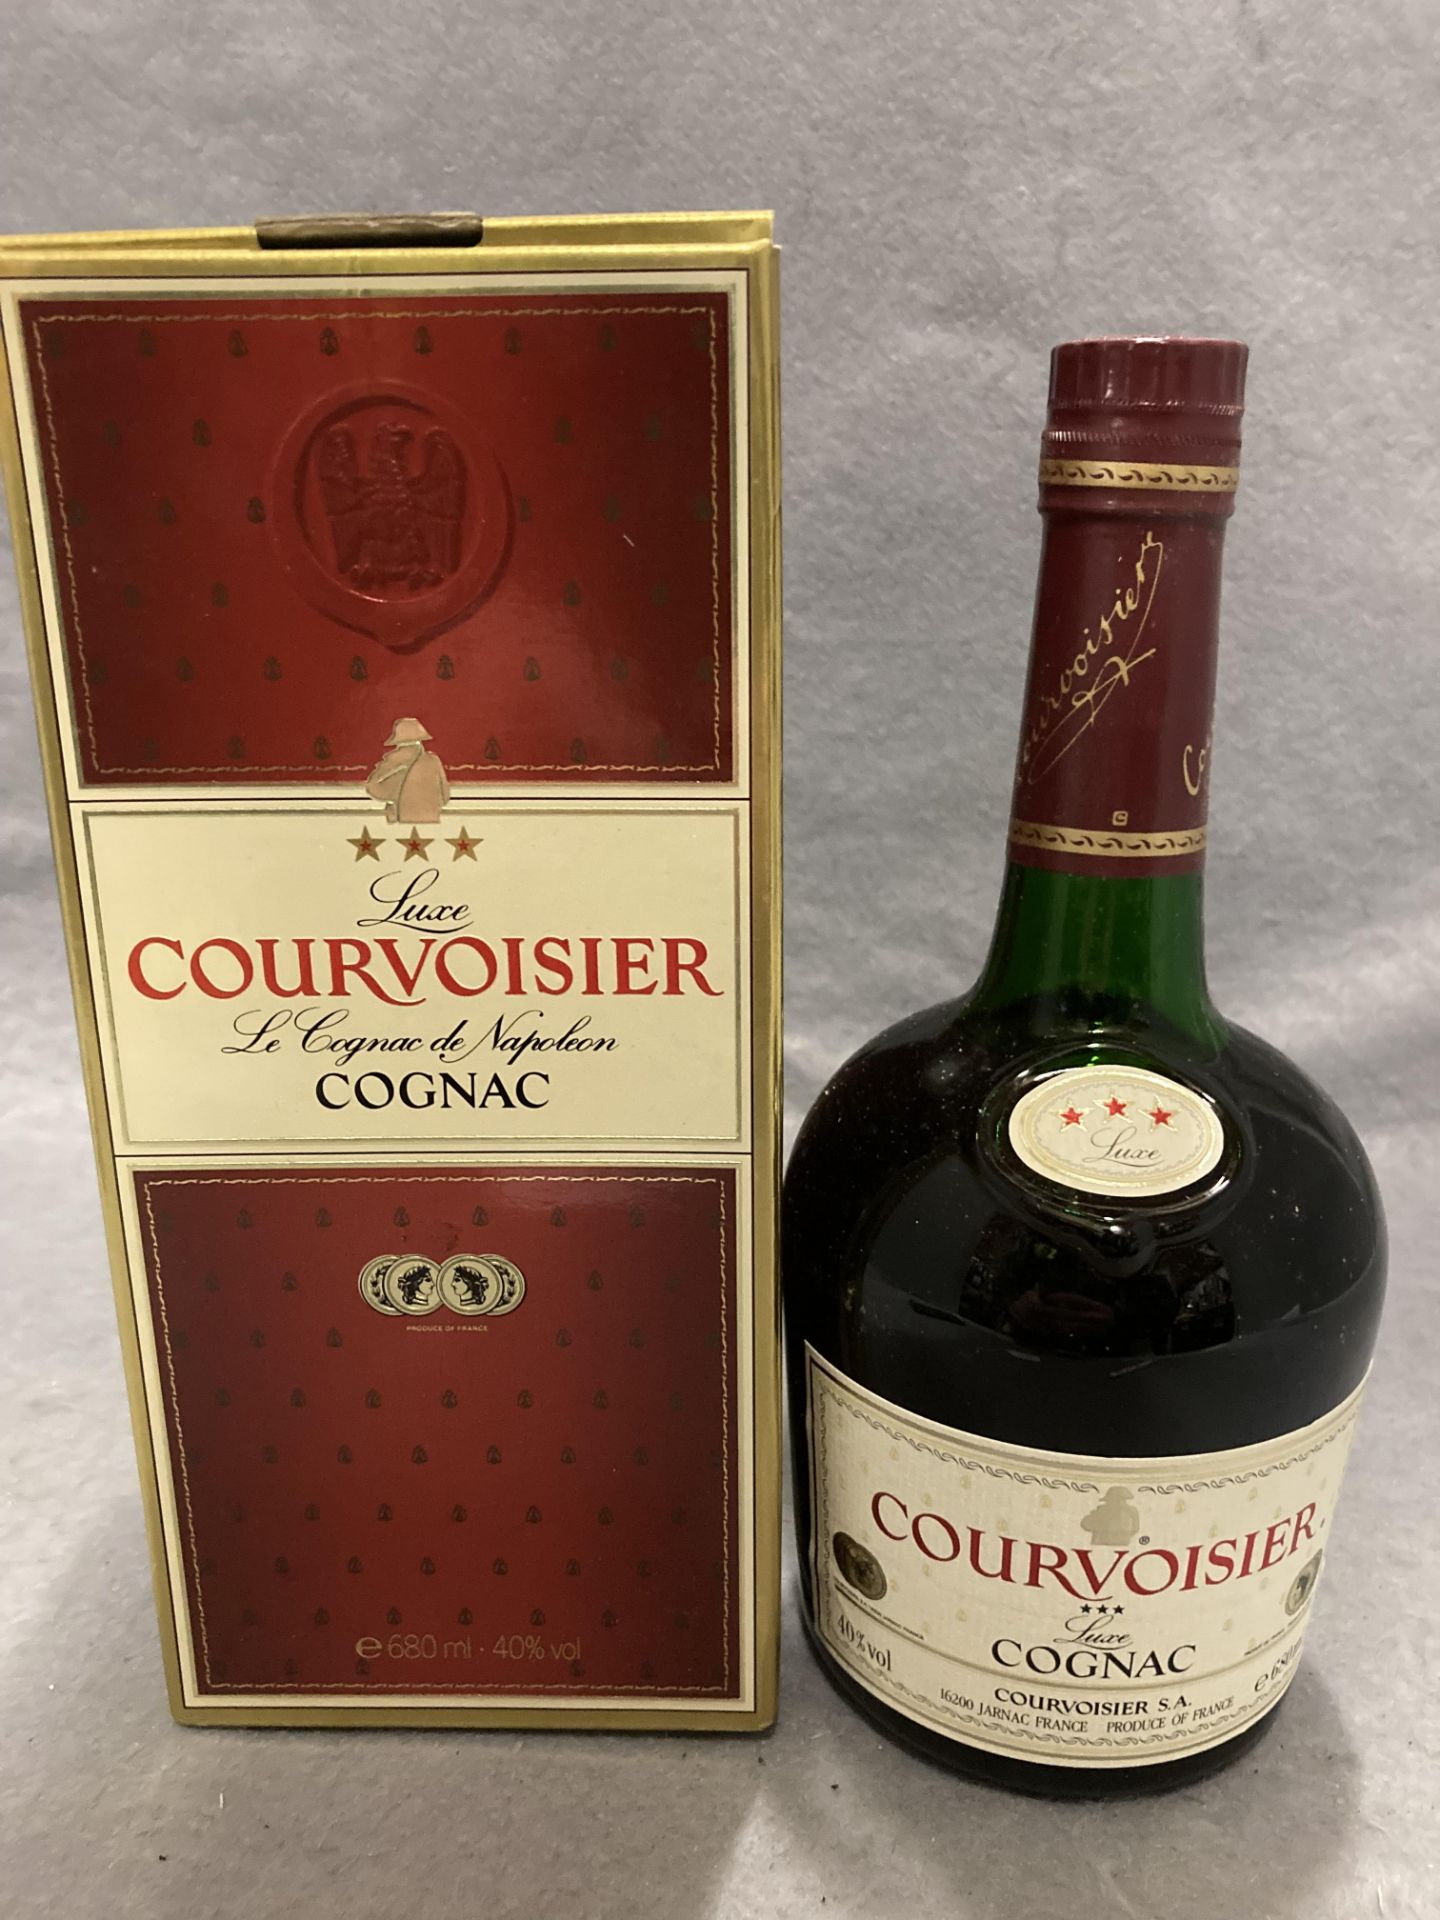 A 680ml bottle of Courvoisier three star luxe Cognac (40% volume) in a presentation box